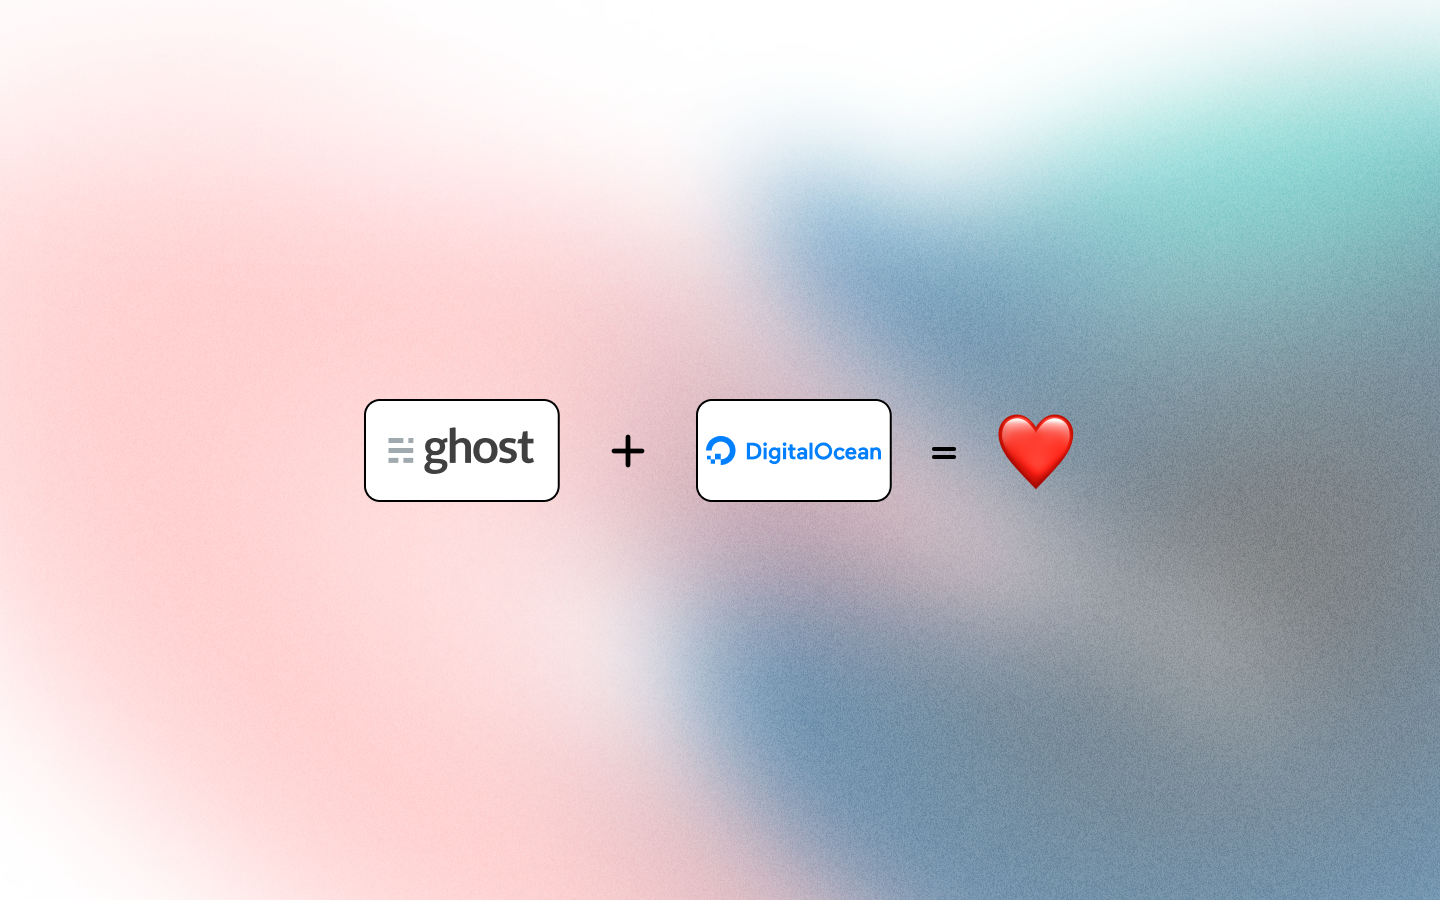 Ghost logo plus DigitalOcean logo equals heart emoji.